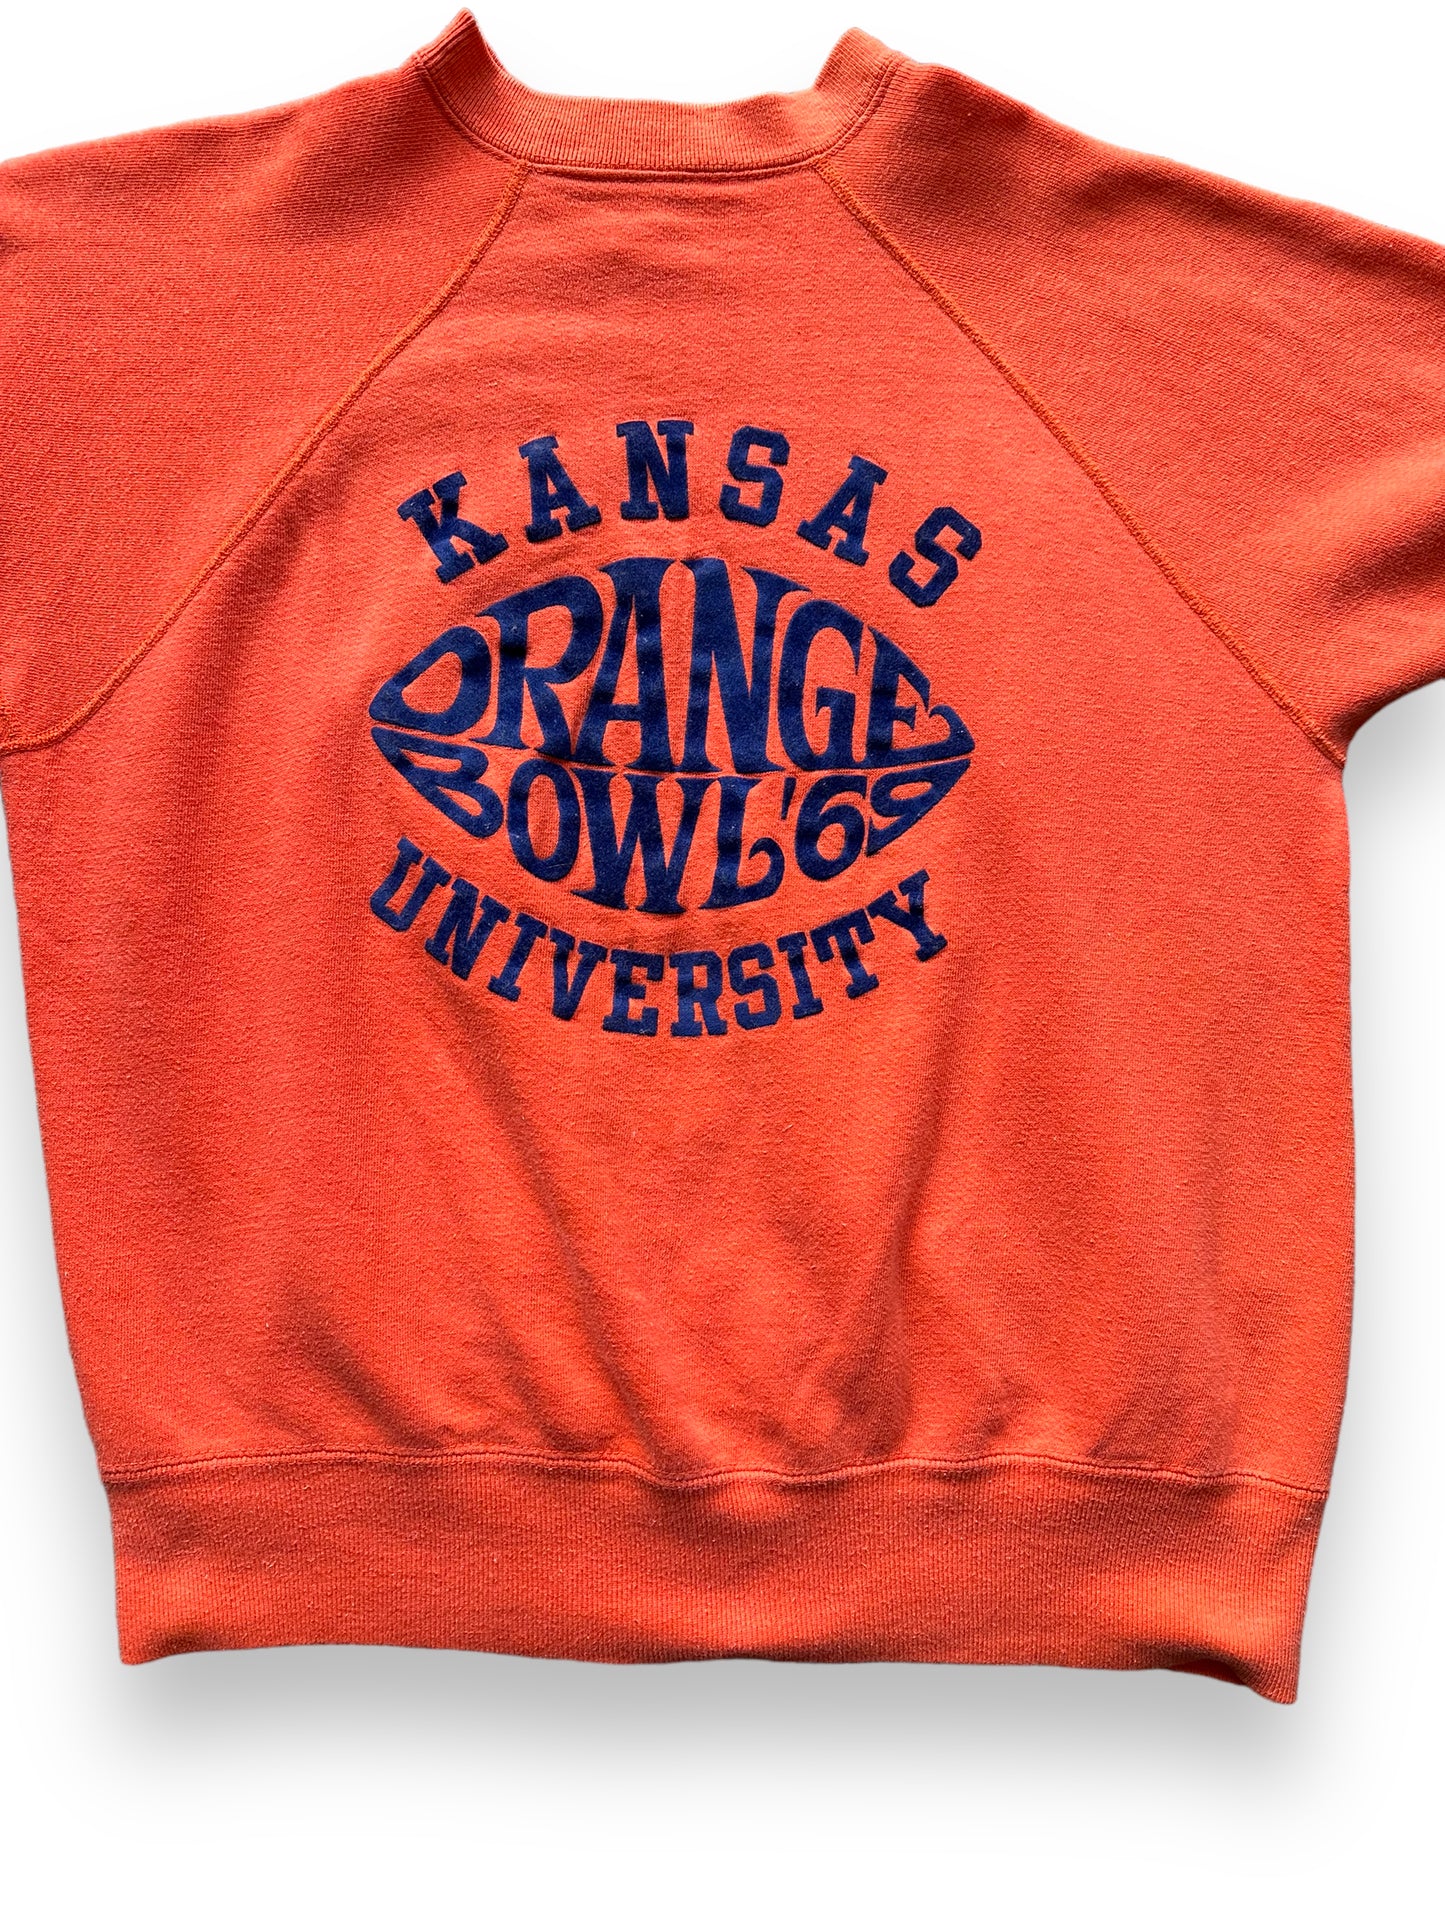 Front Detail on Vintage Artex Kansas University 1969 Orange Bowl Short Sleeve Crewneck Sweatshirt SZ L | Barn Owl Vintage Clothing | Seattle Vintage Sweatshirts